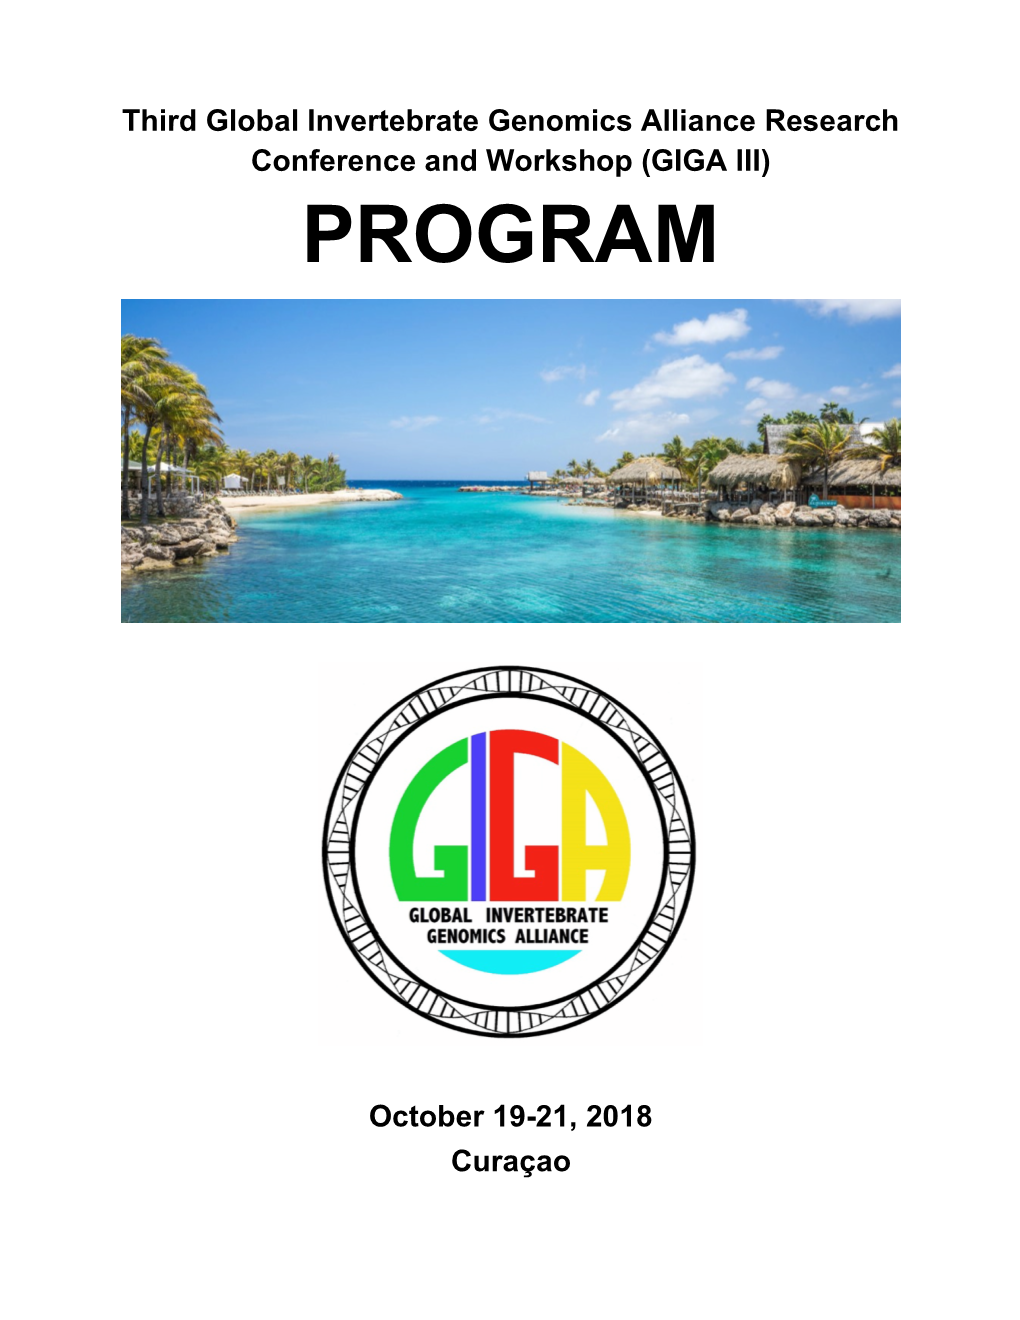 GIGA III Draft Program 12 October 2018